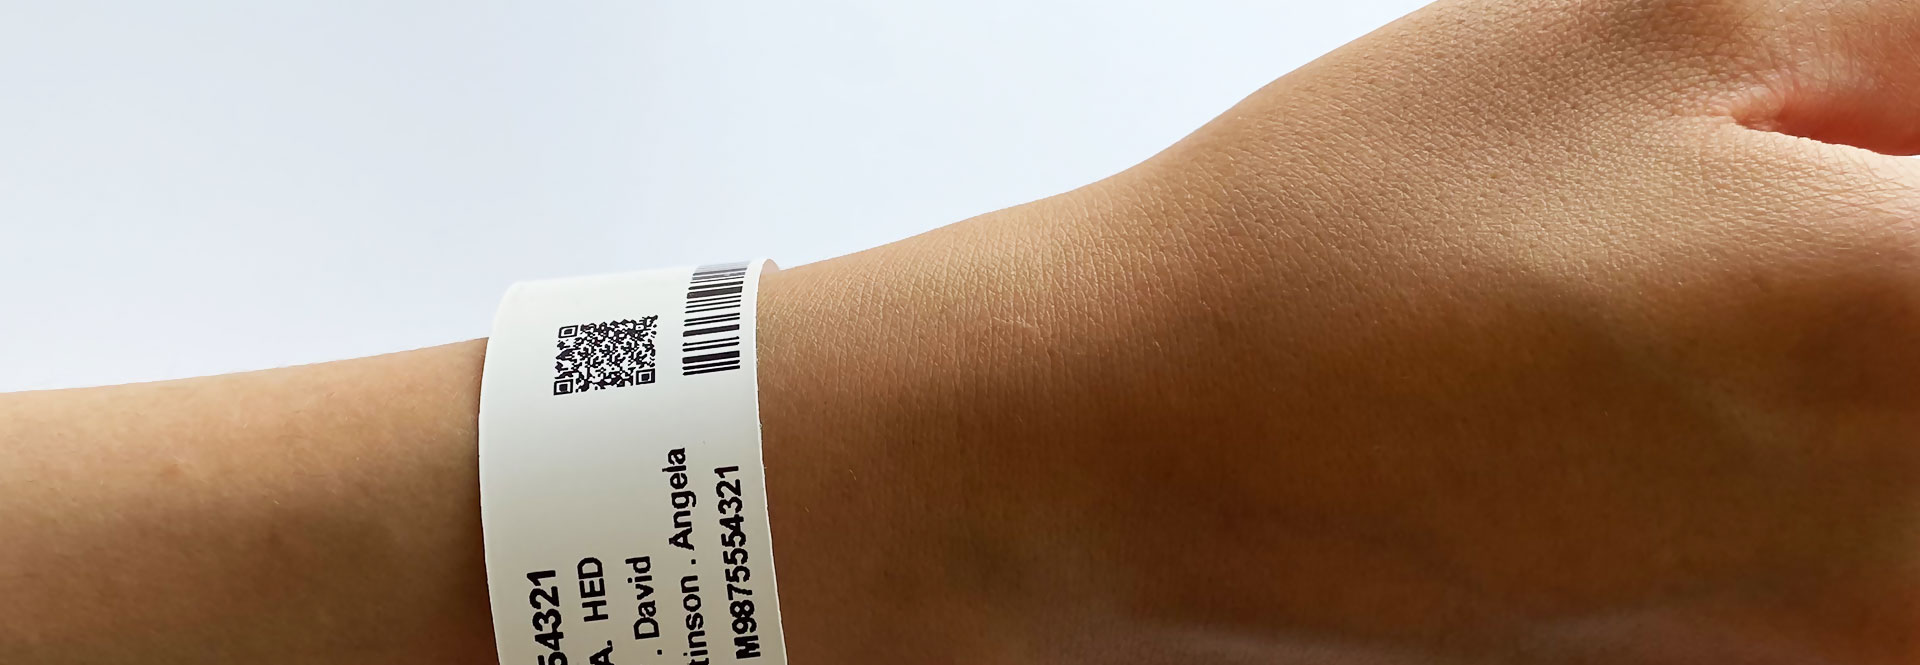 wristband in hospital